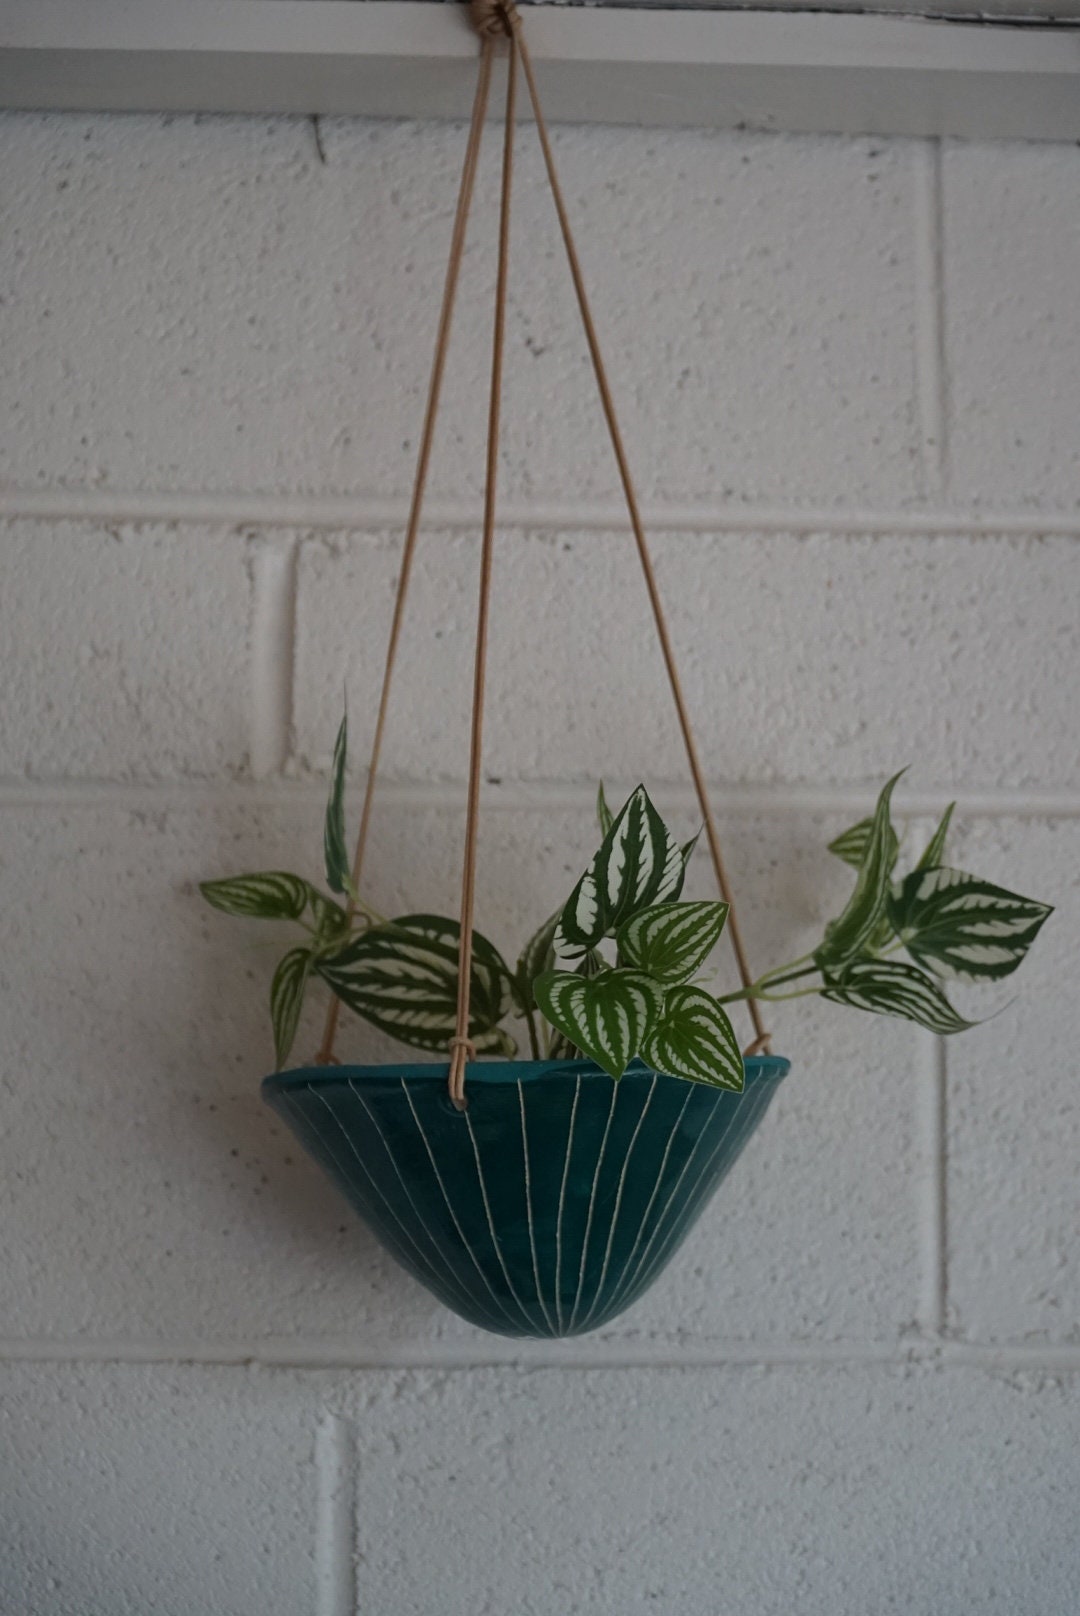 Teal & White Glazed Hanging Planter w/ "Vertical Line" Design - Hanging Pot w/ Carved Design - Succulent, Cactus, Herb, Air Plant, Etc